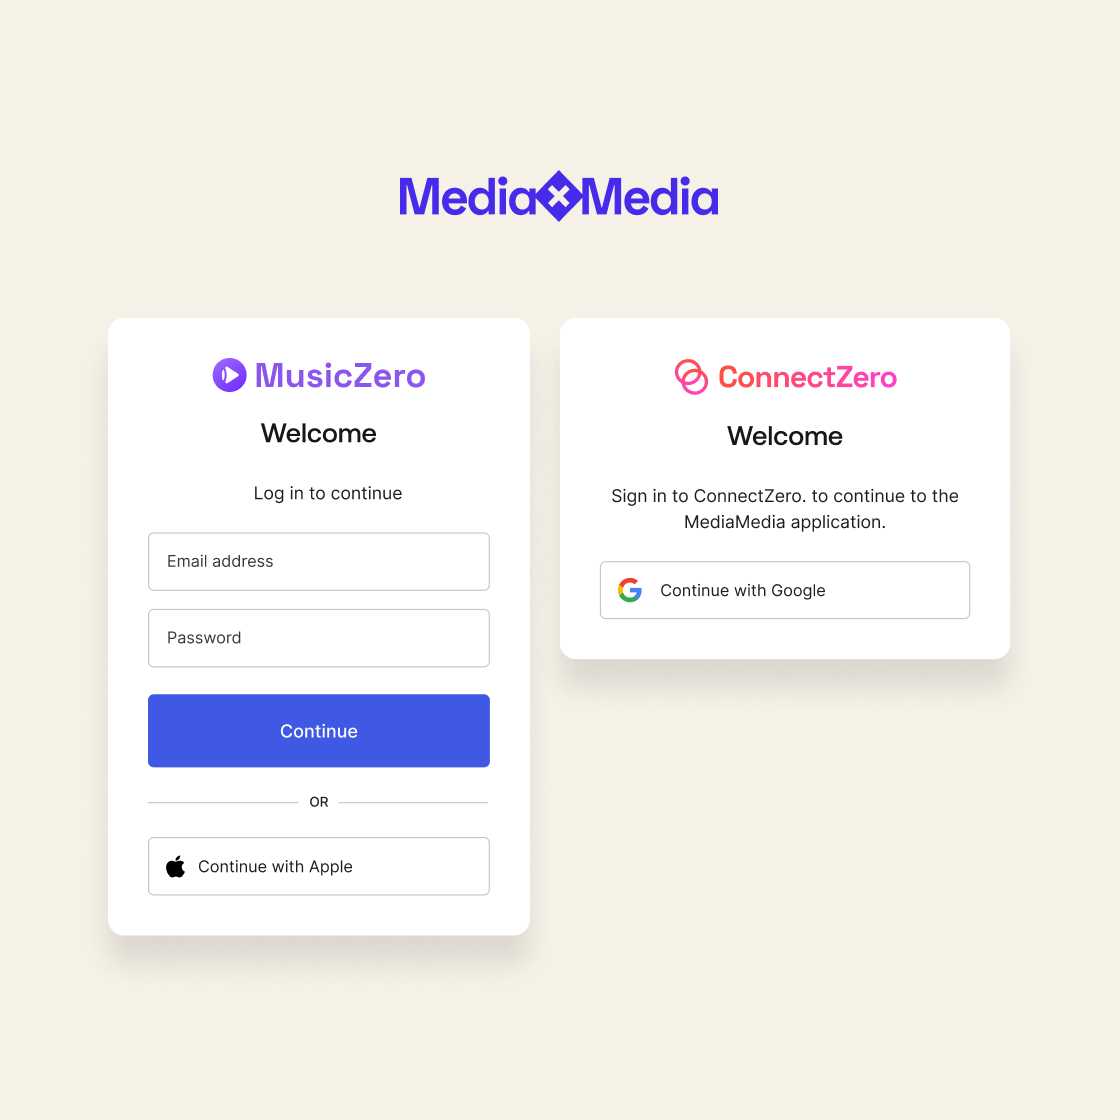 Image of MediaxMedia customized login portal.